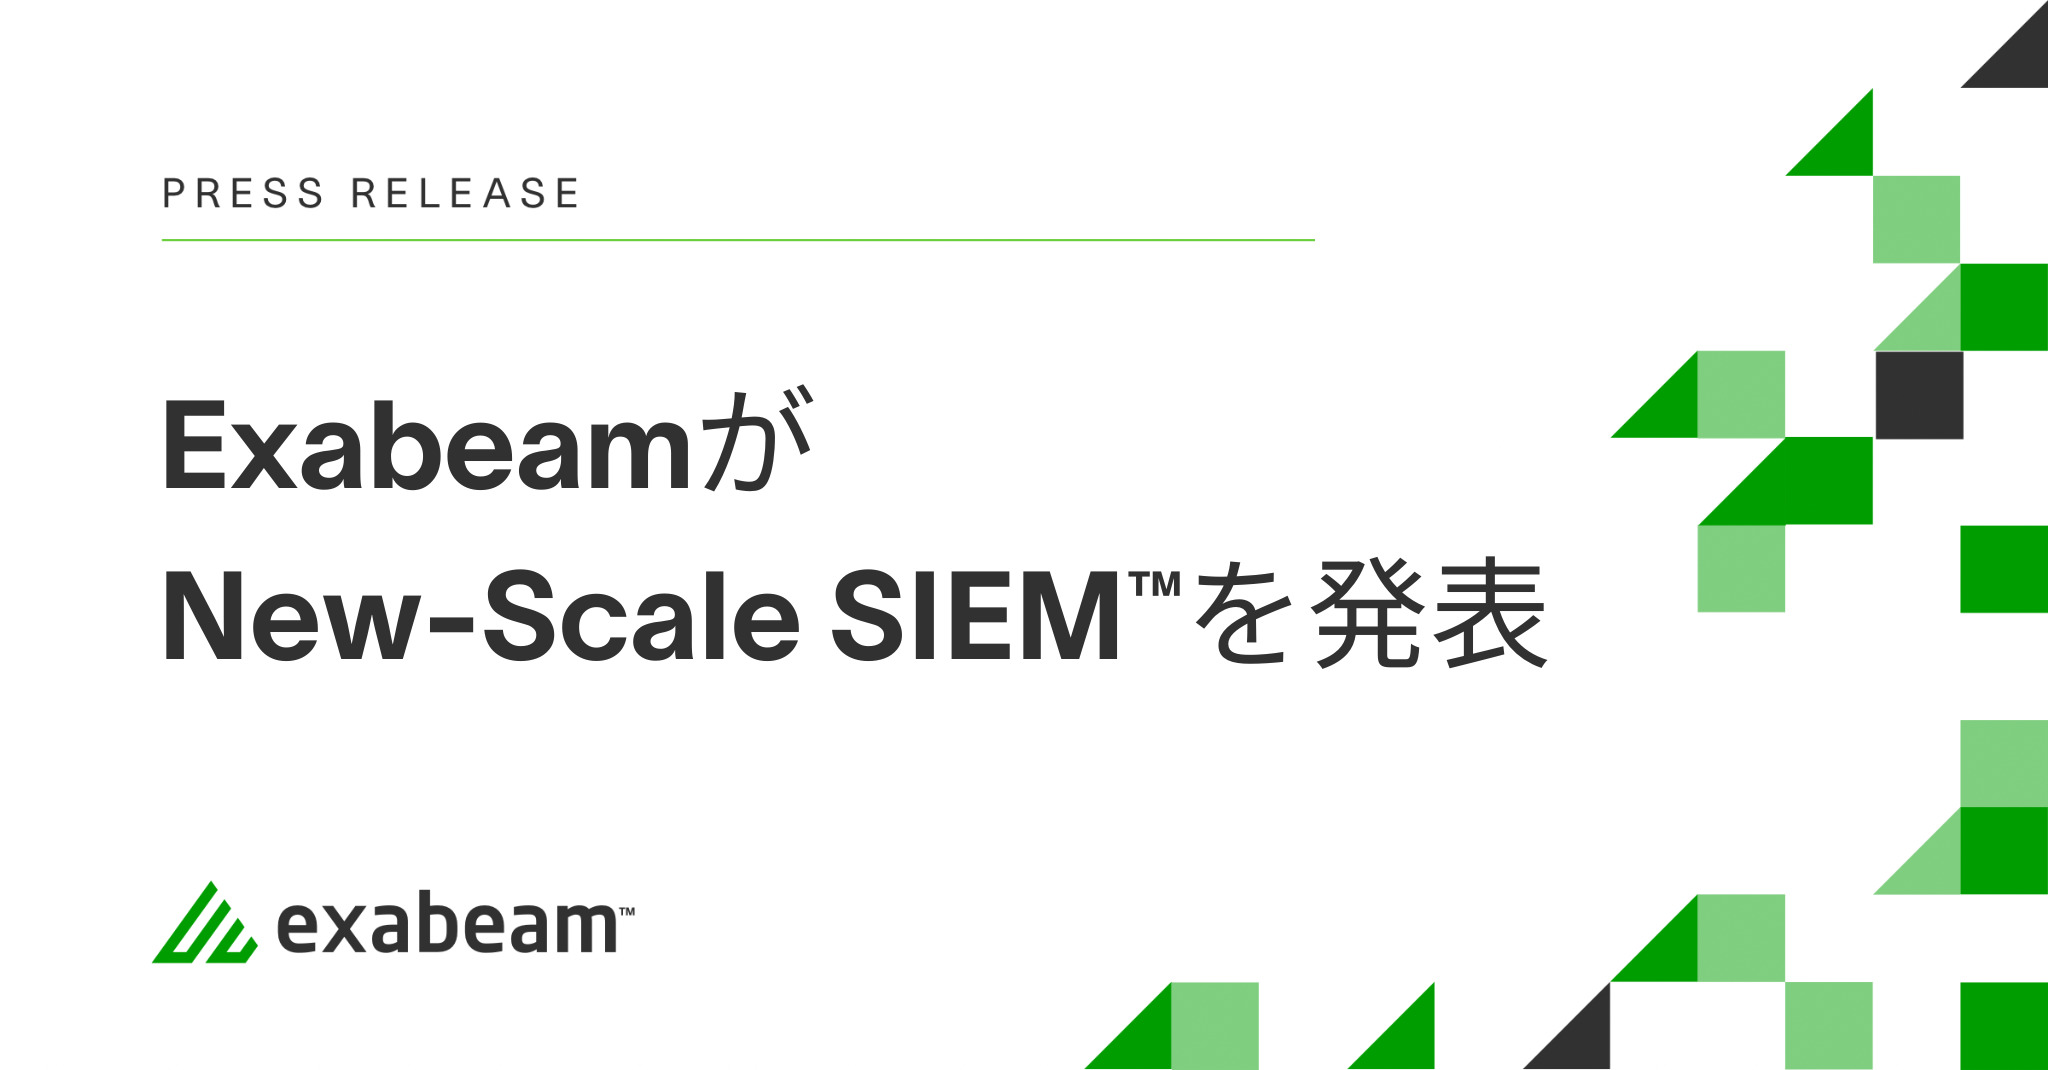 Exabeamが業界最高レベルのパフォーマンスを誇るクラウドネイティブなセキュリティオペレーションプラットフォームNew-Scale SIEM™を発表